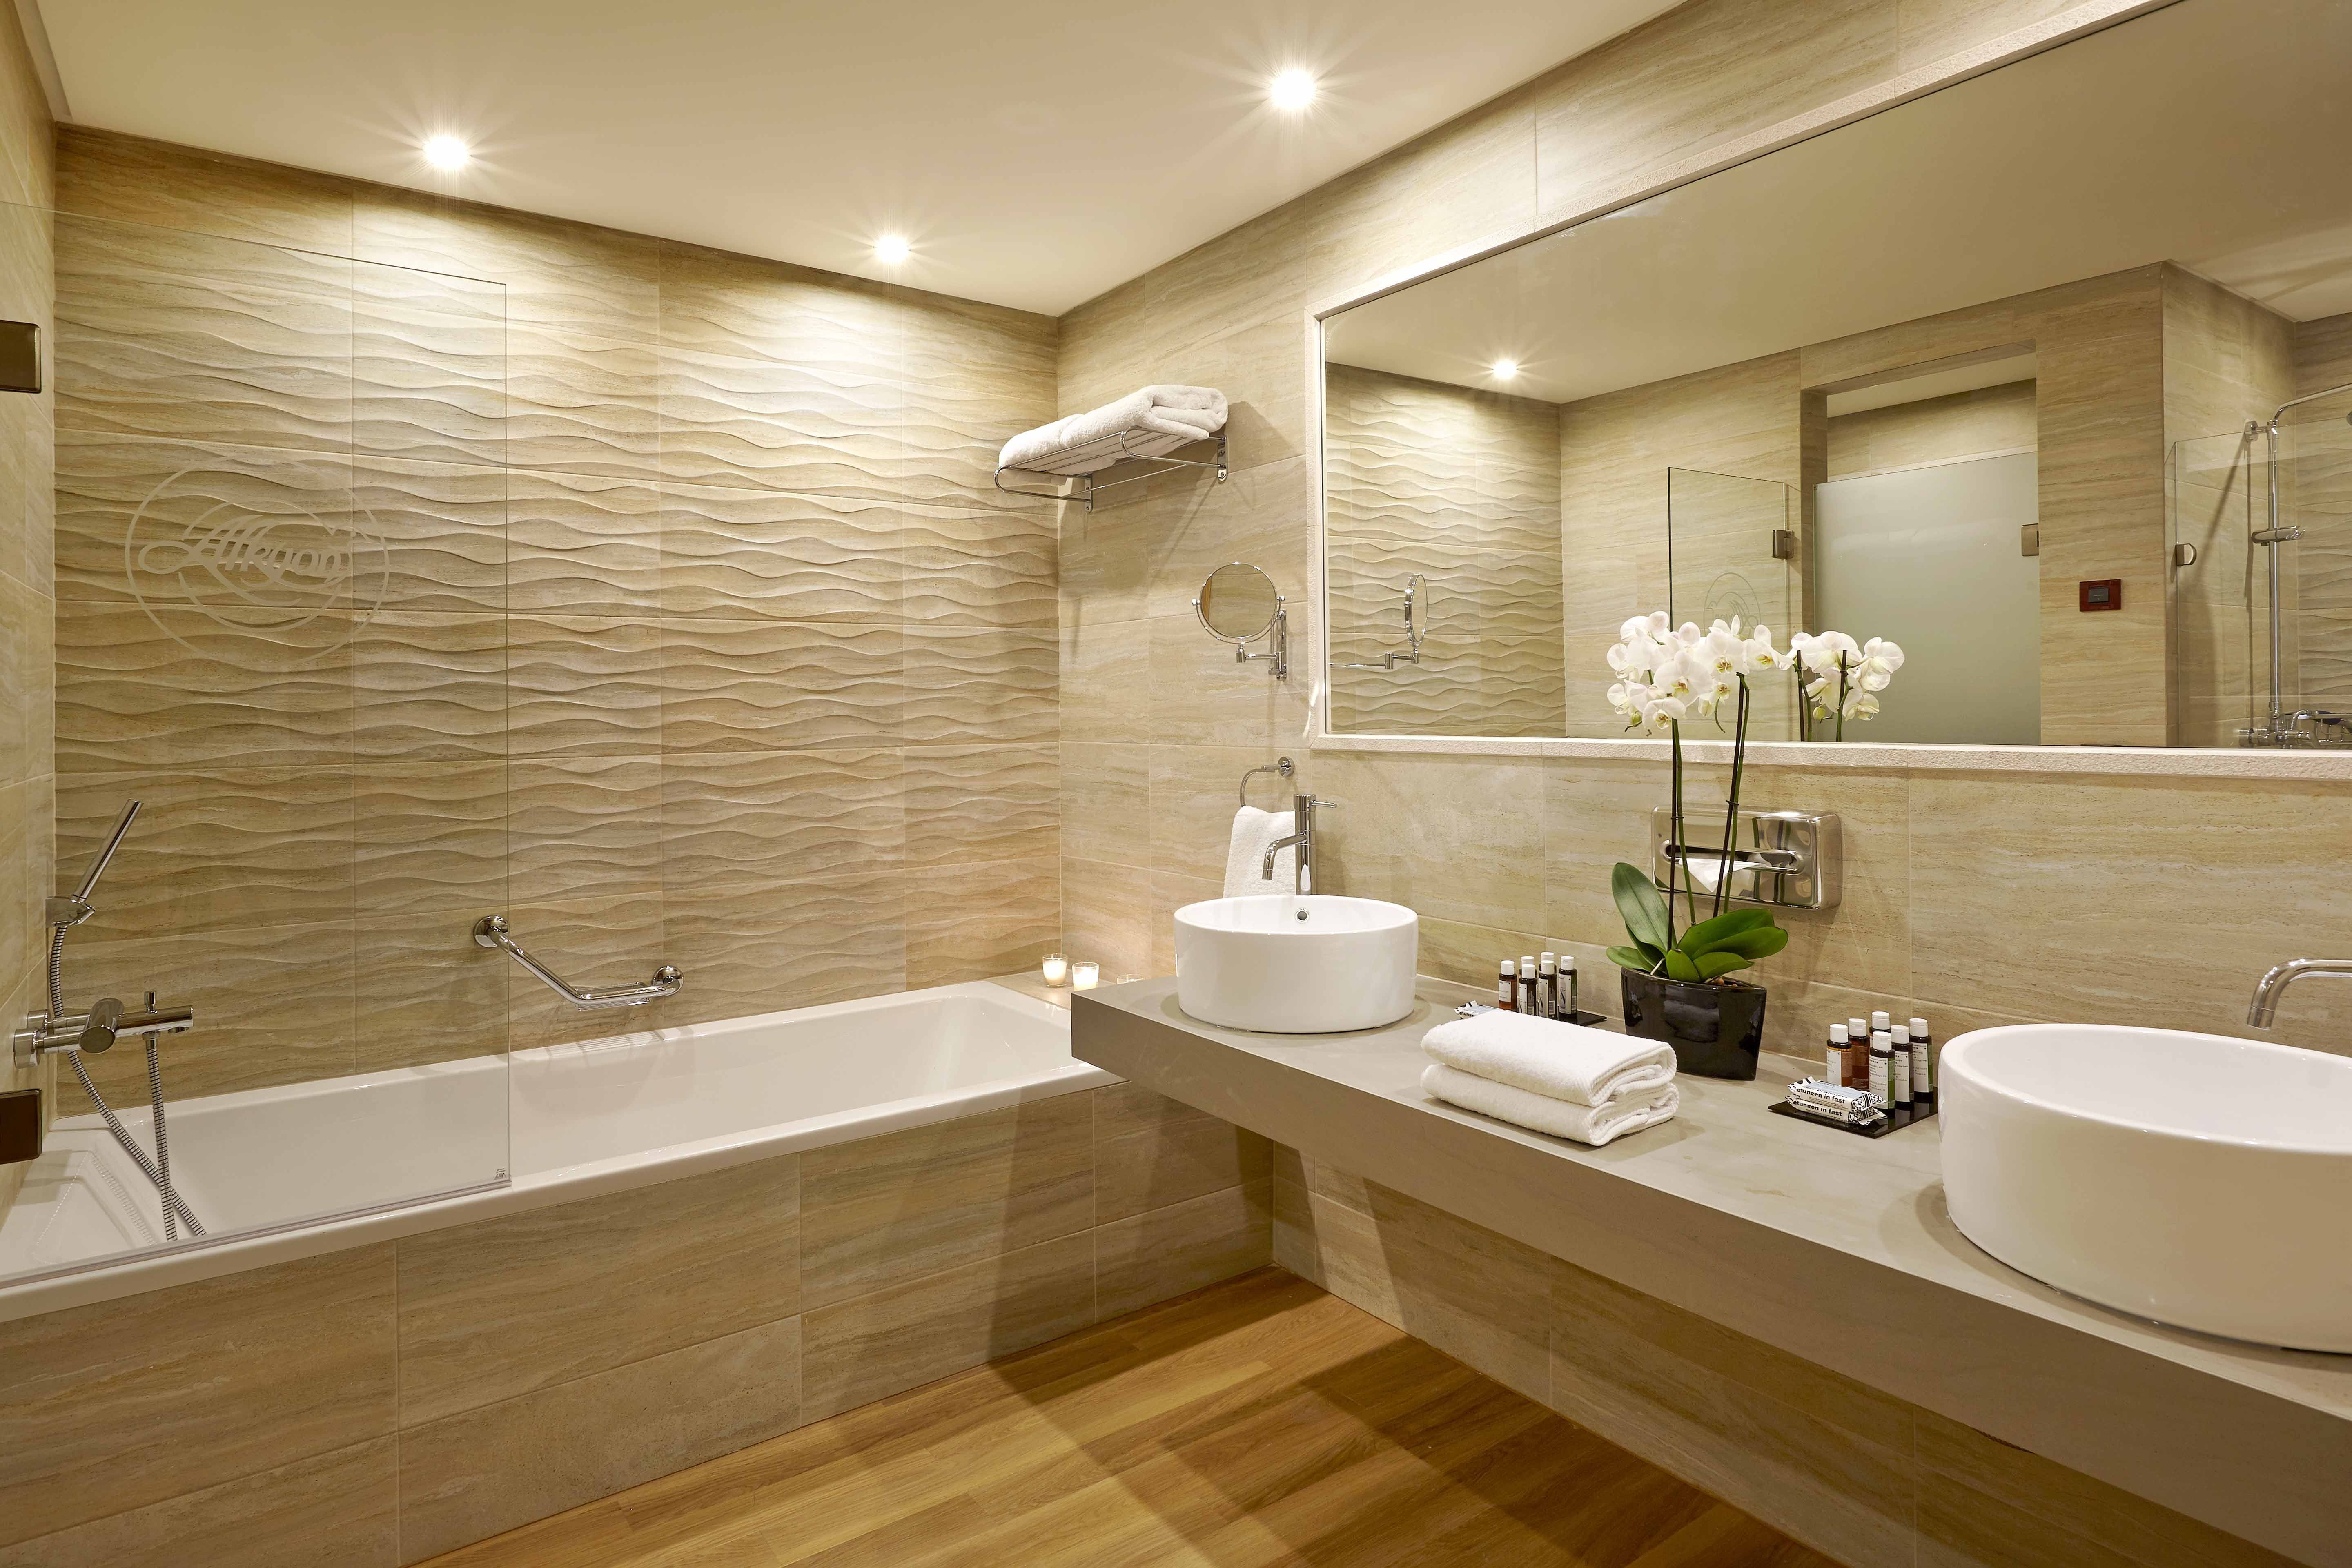 25 Best Bathroom Mirror Ideas For A Small Bathroom